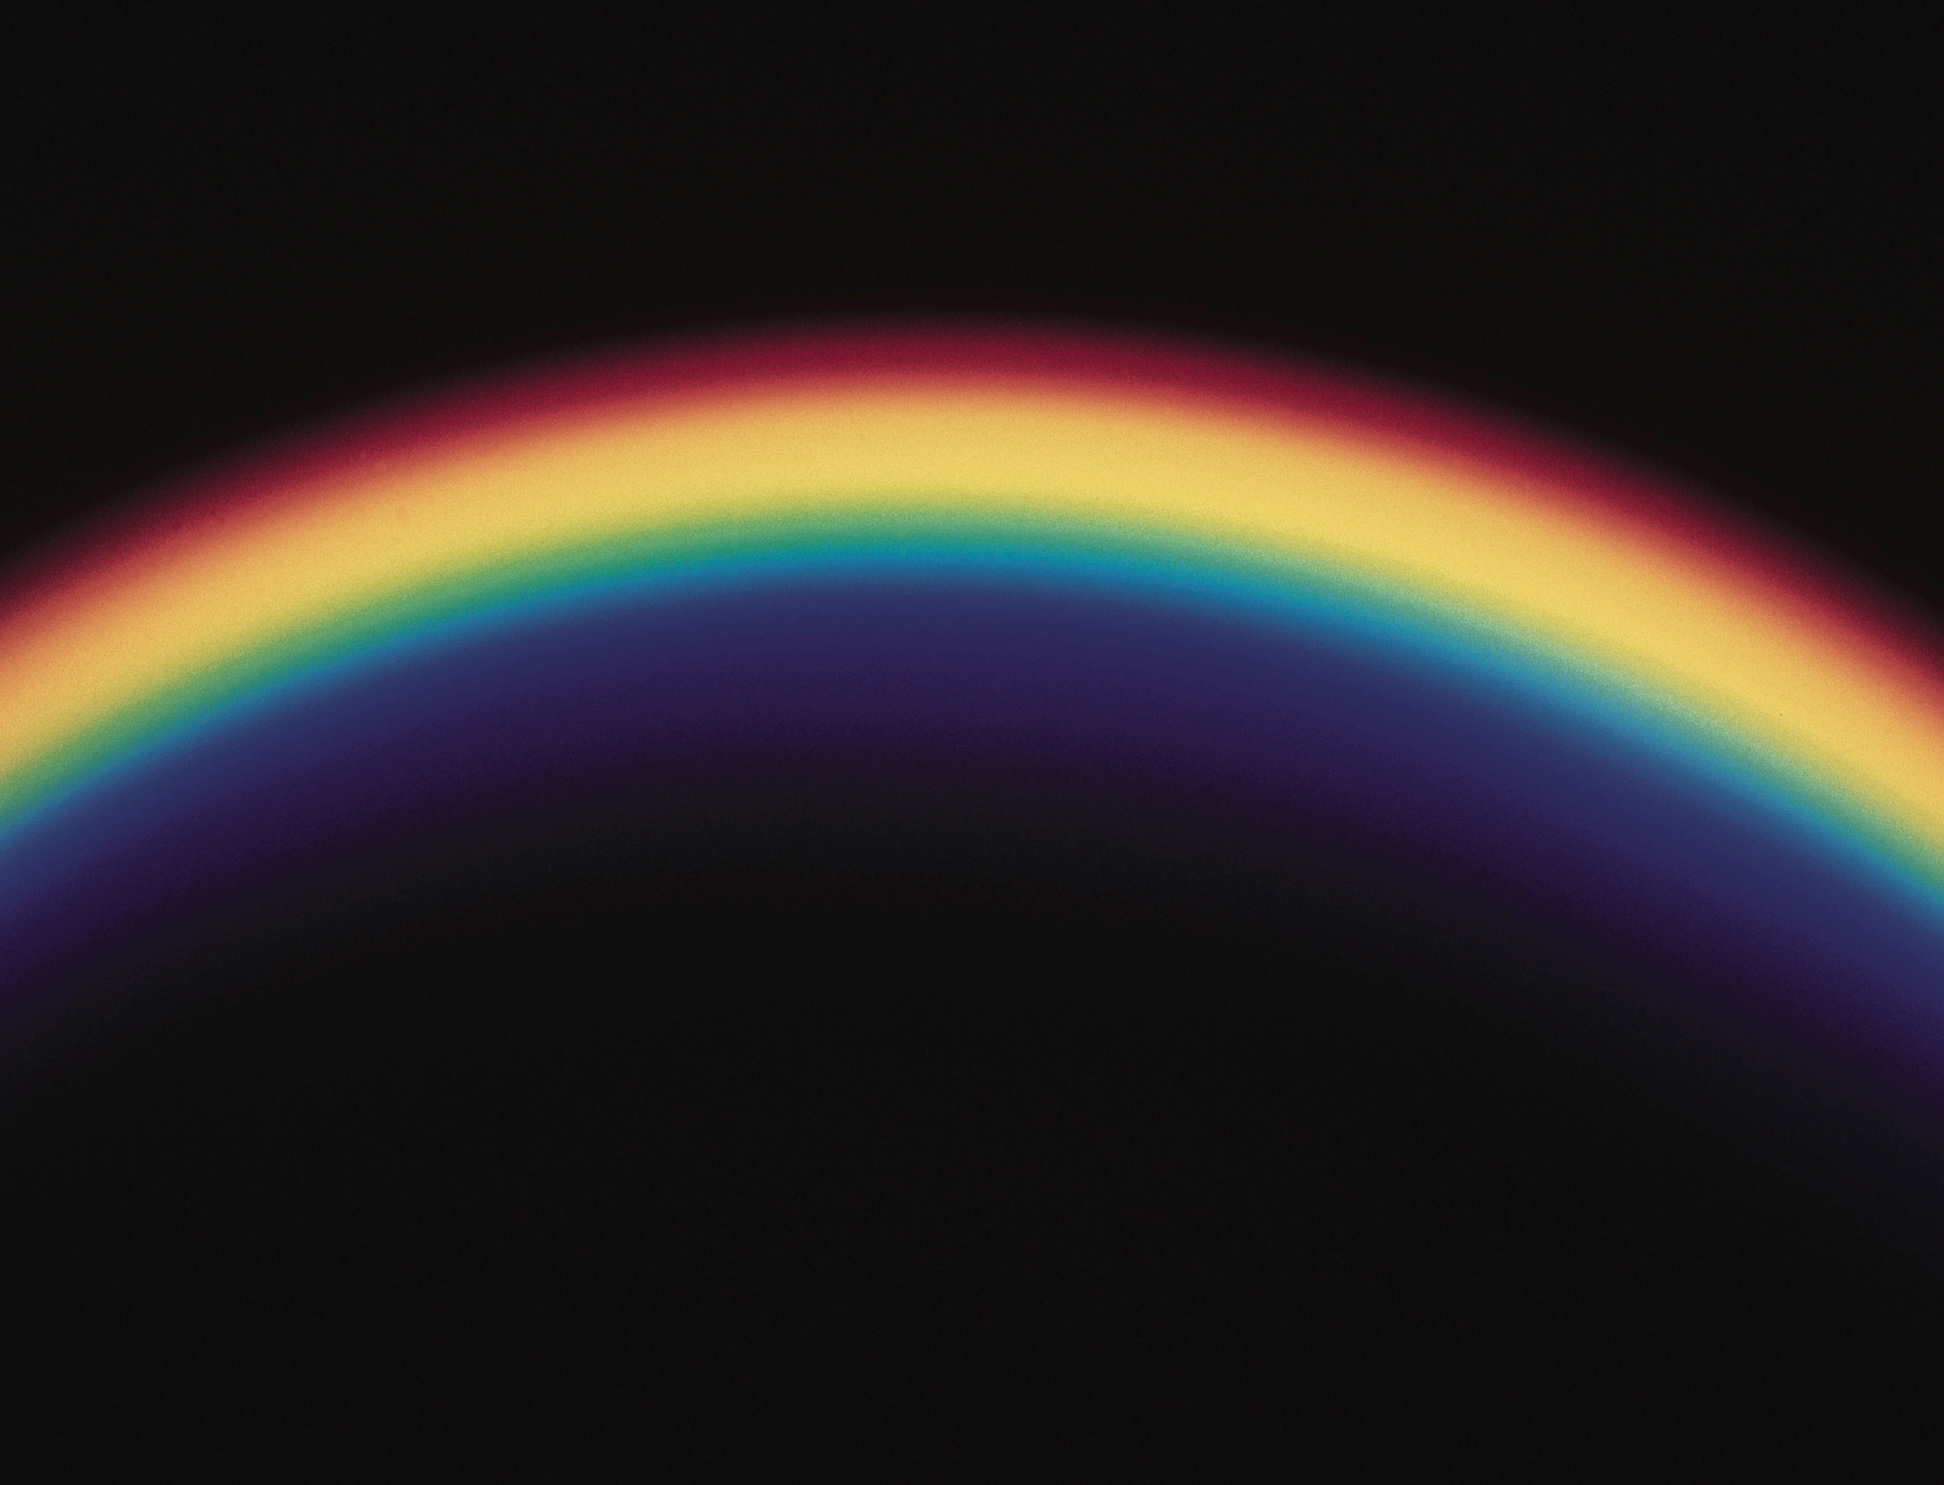 Rainbow on black background